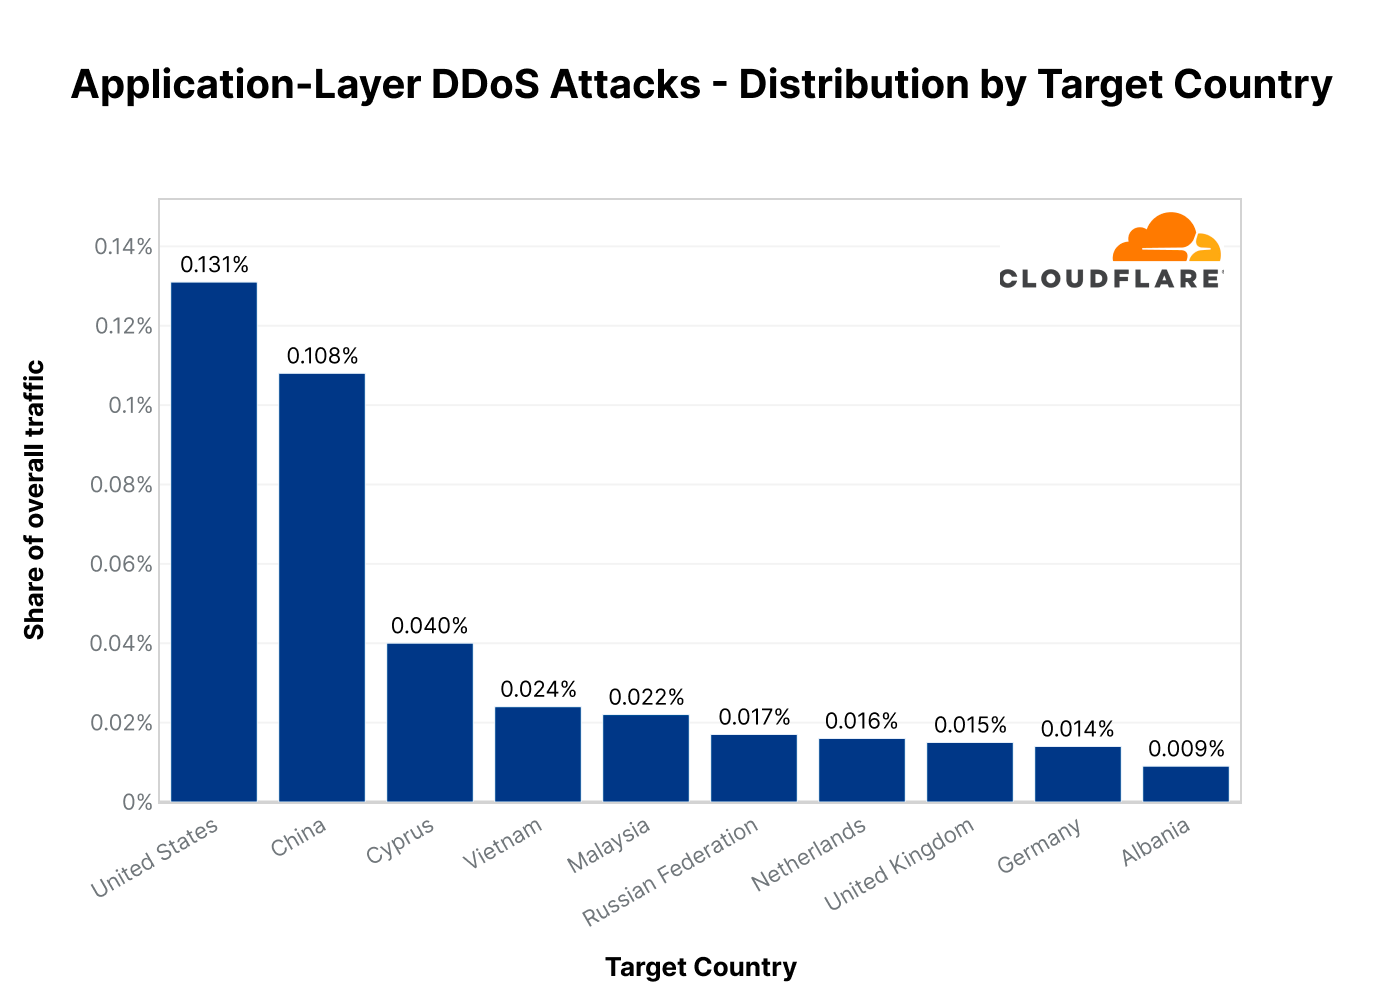 Cloudflare DDoS threat report 2022 Q3